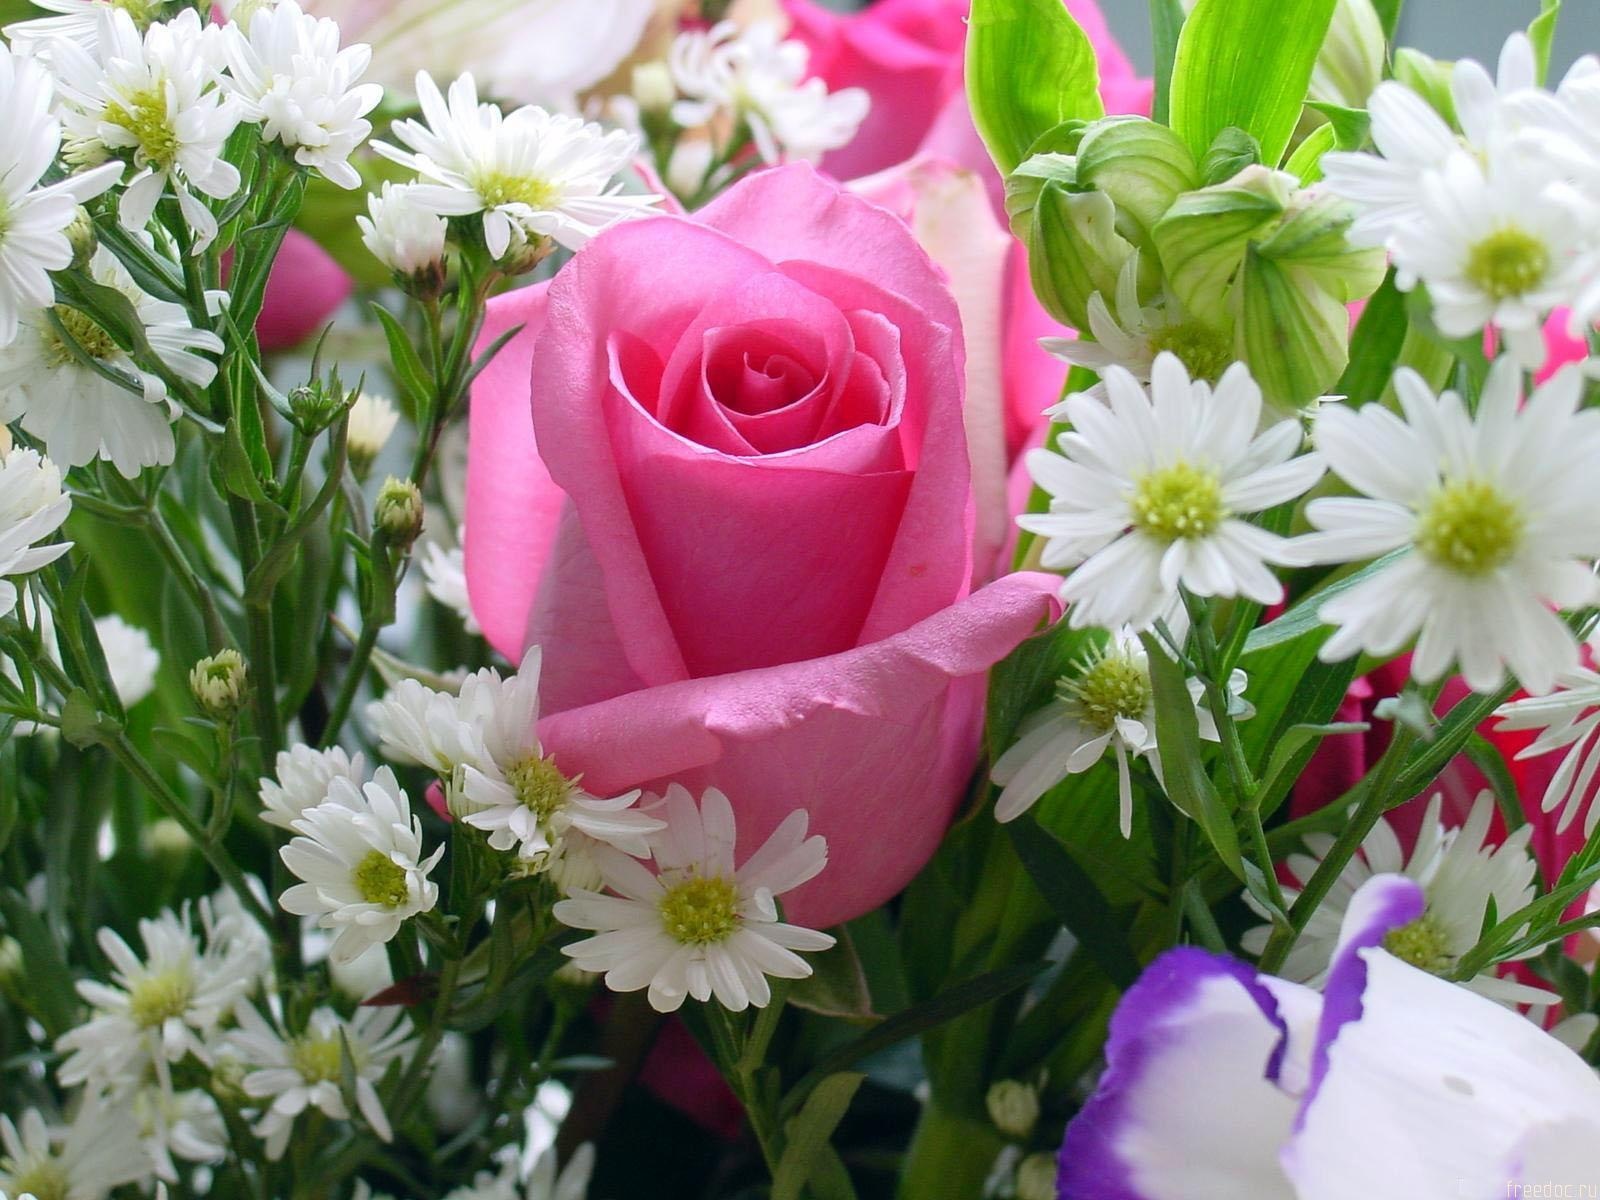 176014 descargar imagen flor, tierra/naturaleza, rosa rosada, flores, rosa: fondos de pantalla y protectores de pantalla gratis